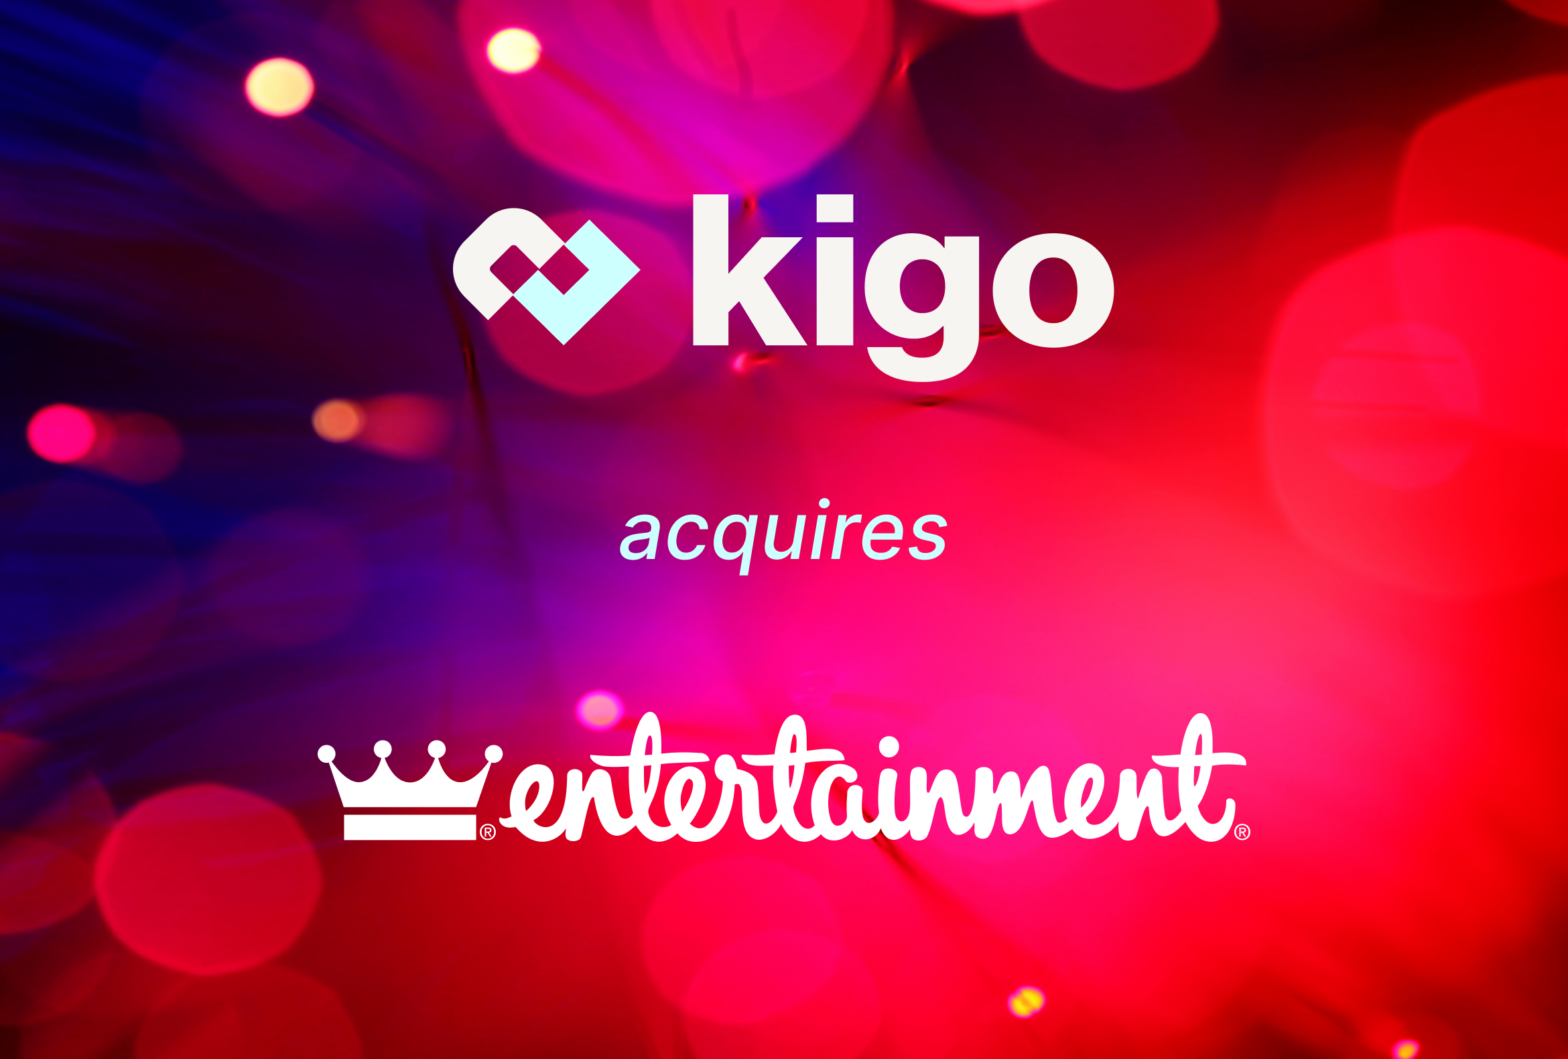 Kigo acquires Entertainment